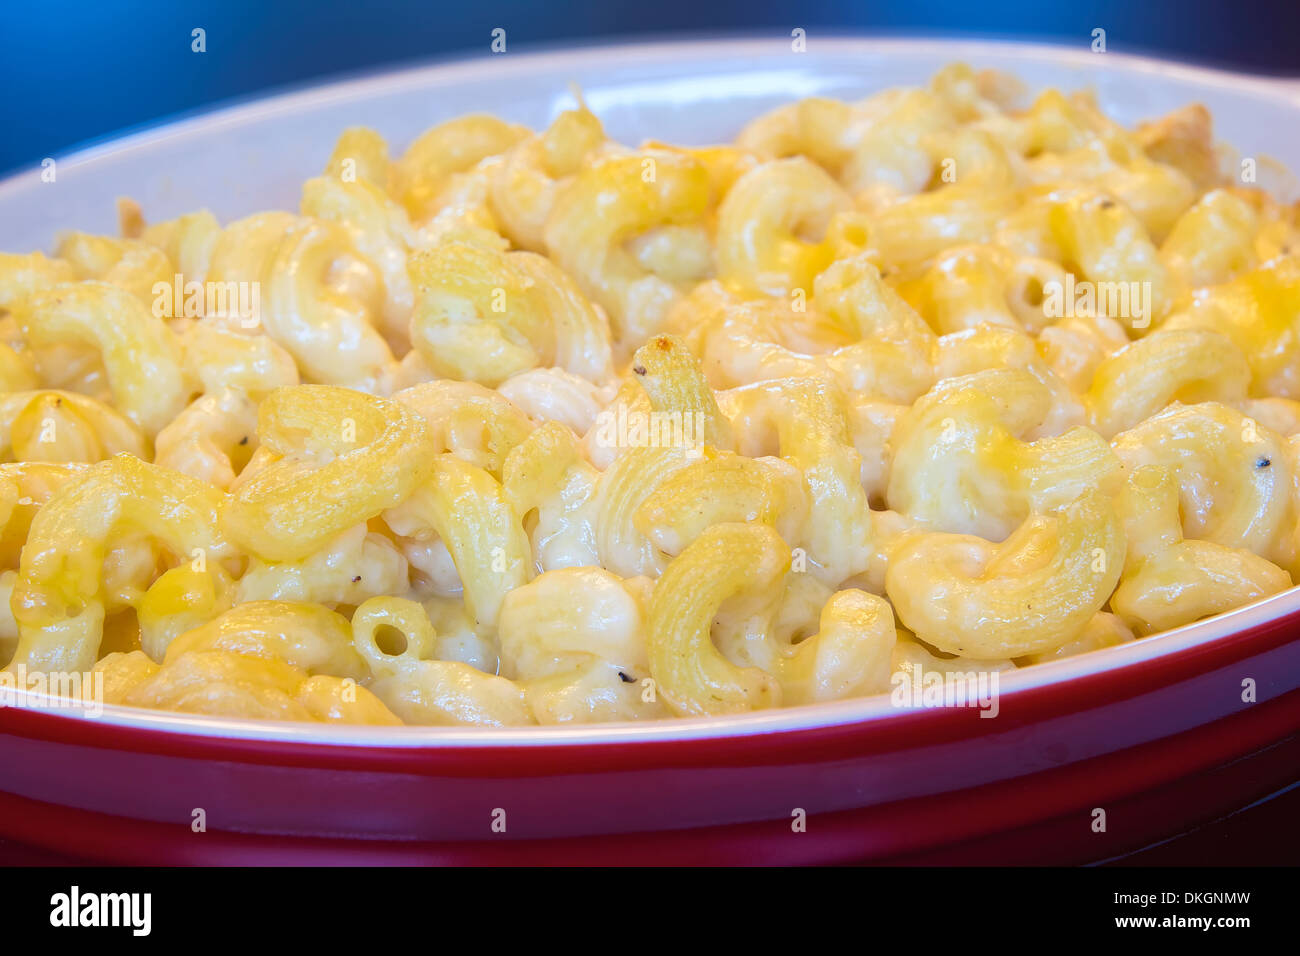 Macaroni and Cheese in Red Ceramic Baking Dish Closeup Stock Photo